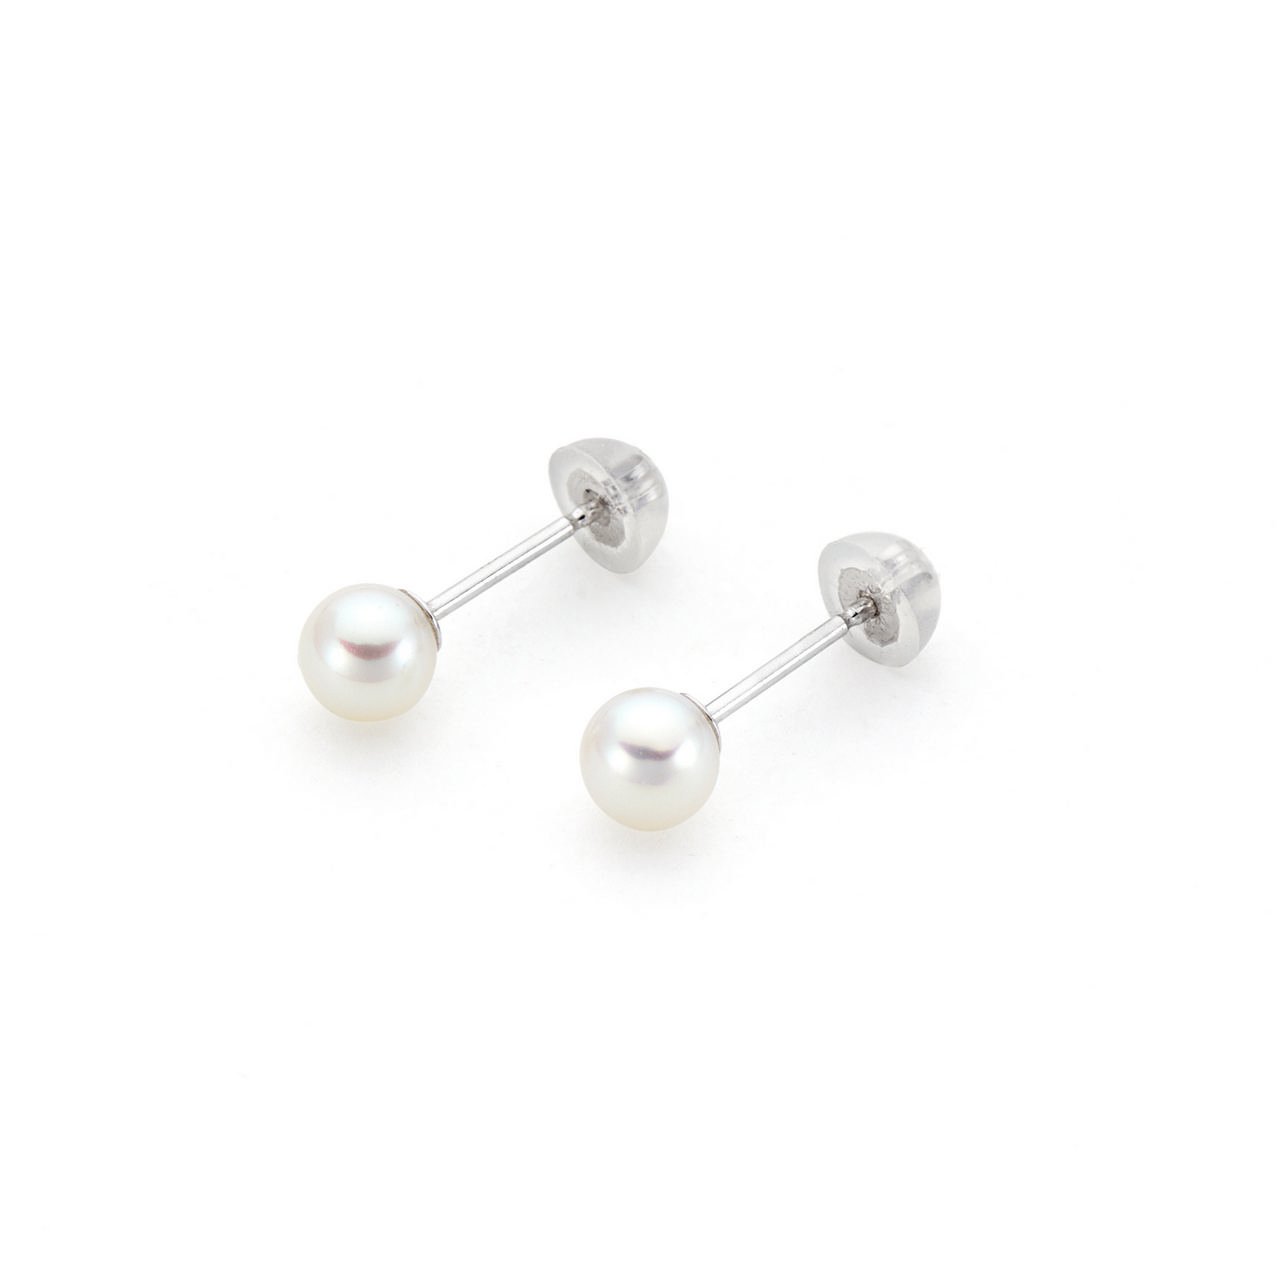 Genisi pearls - genisi pearls - orecchini con perle giapponesi akoya - gp_002